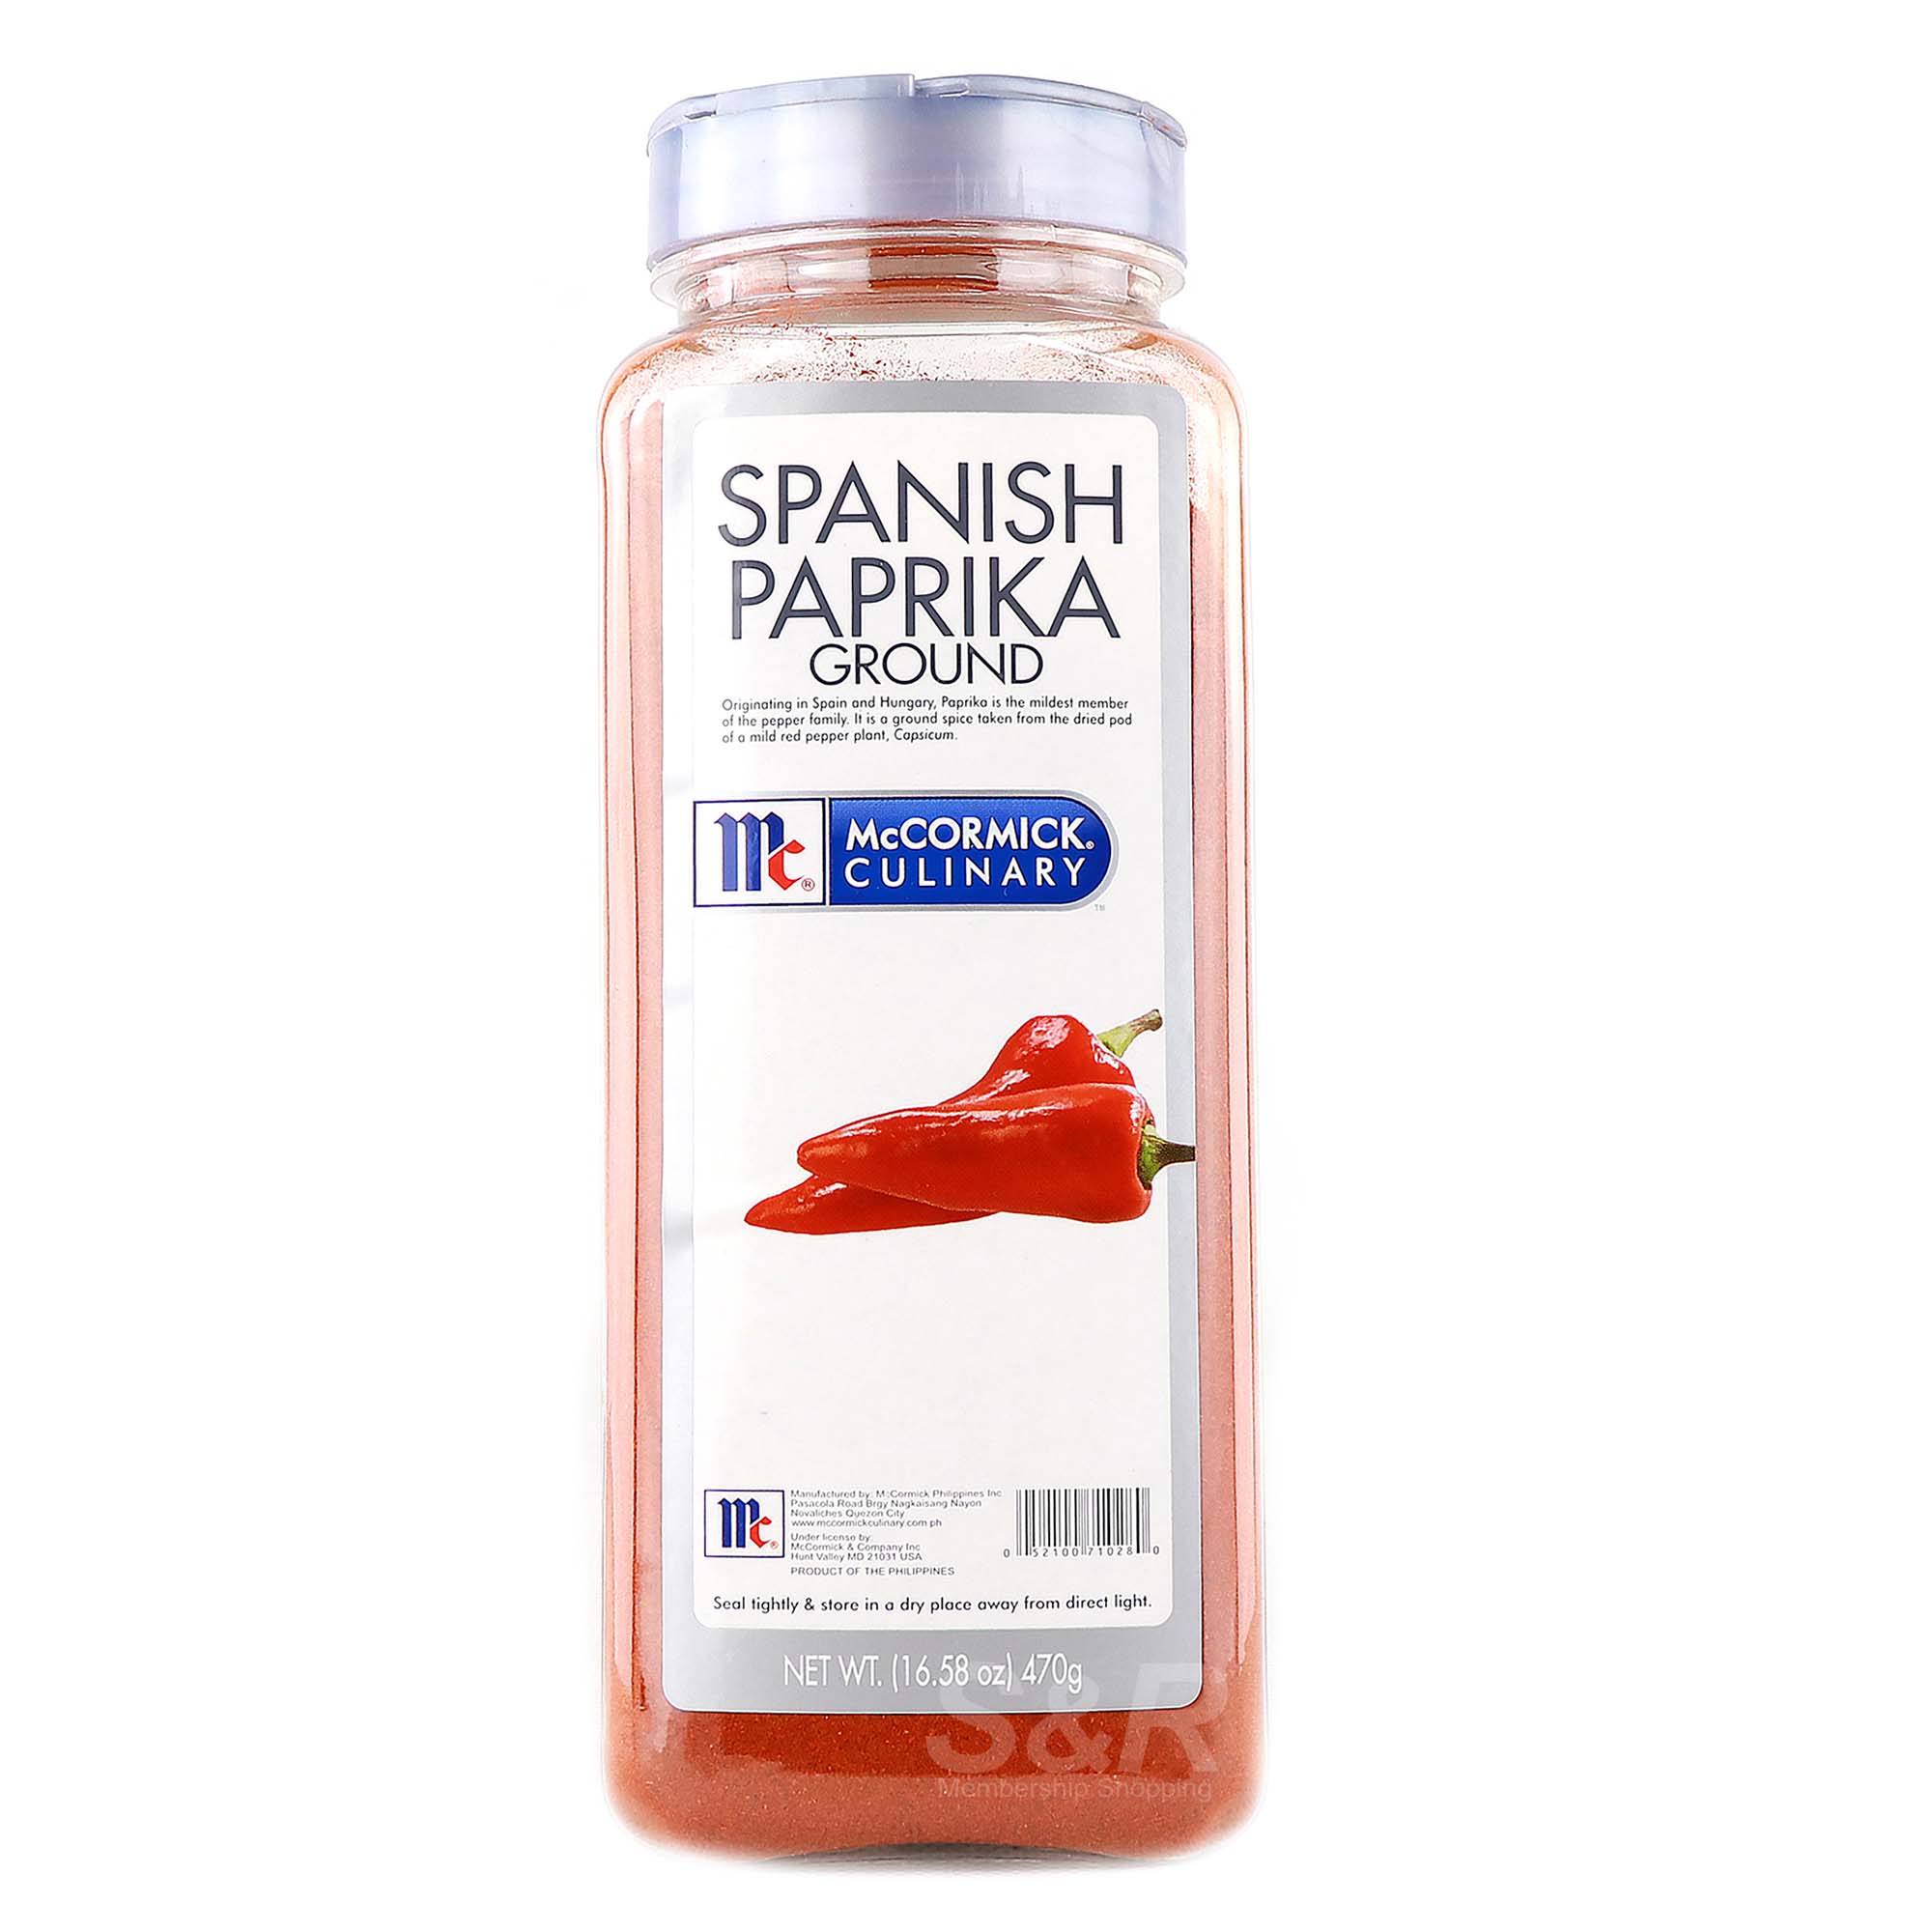 McCormick Culinary Spanish Paprika Ground Seasoning 470g